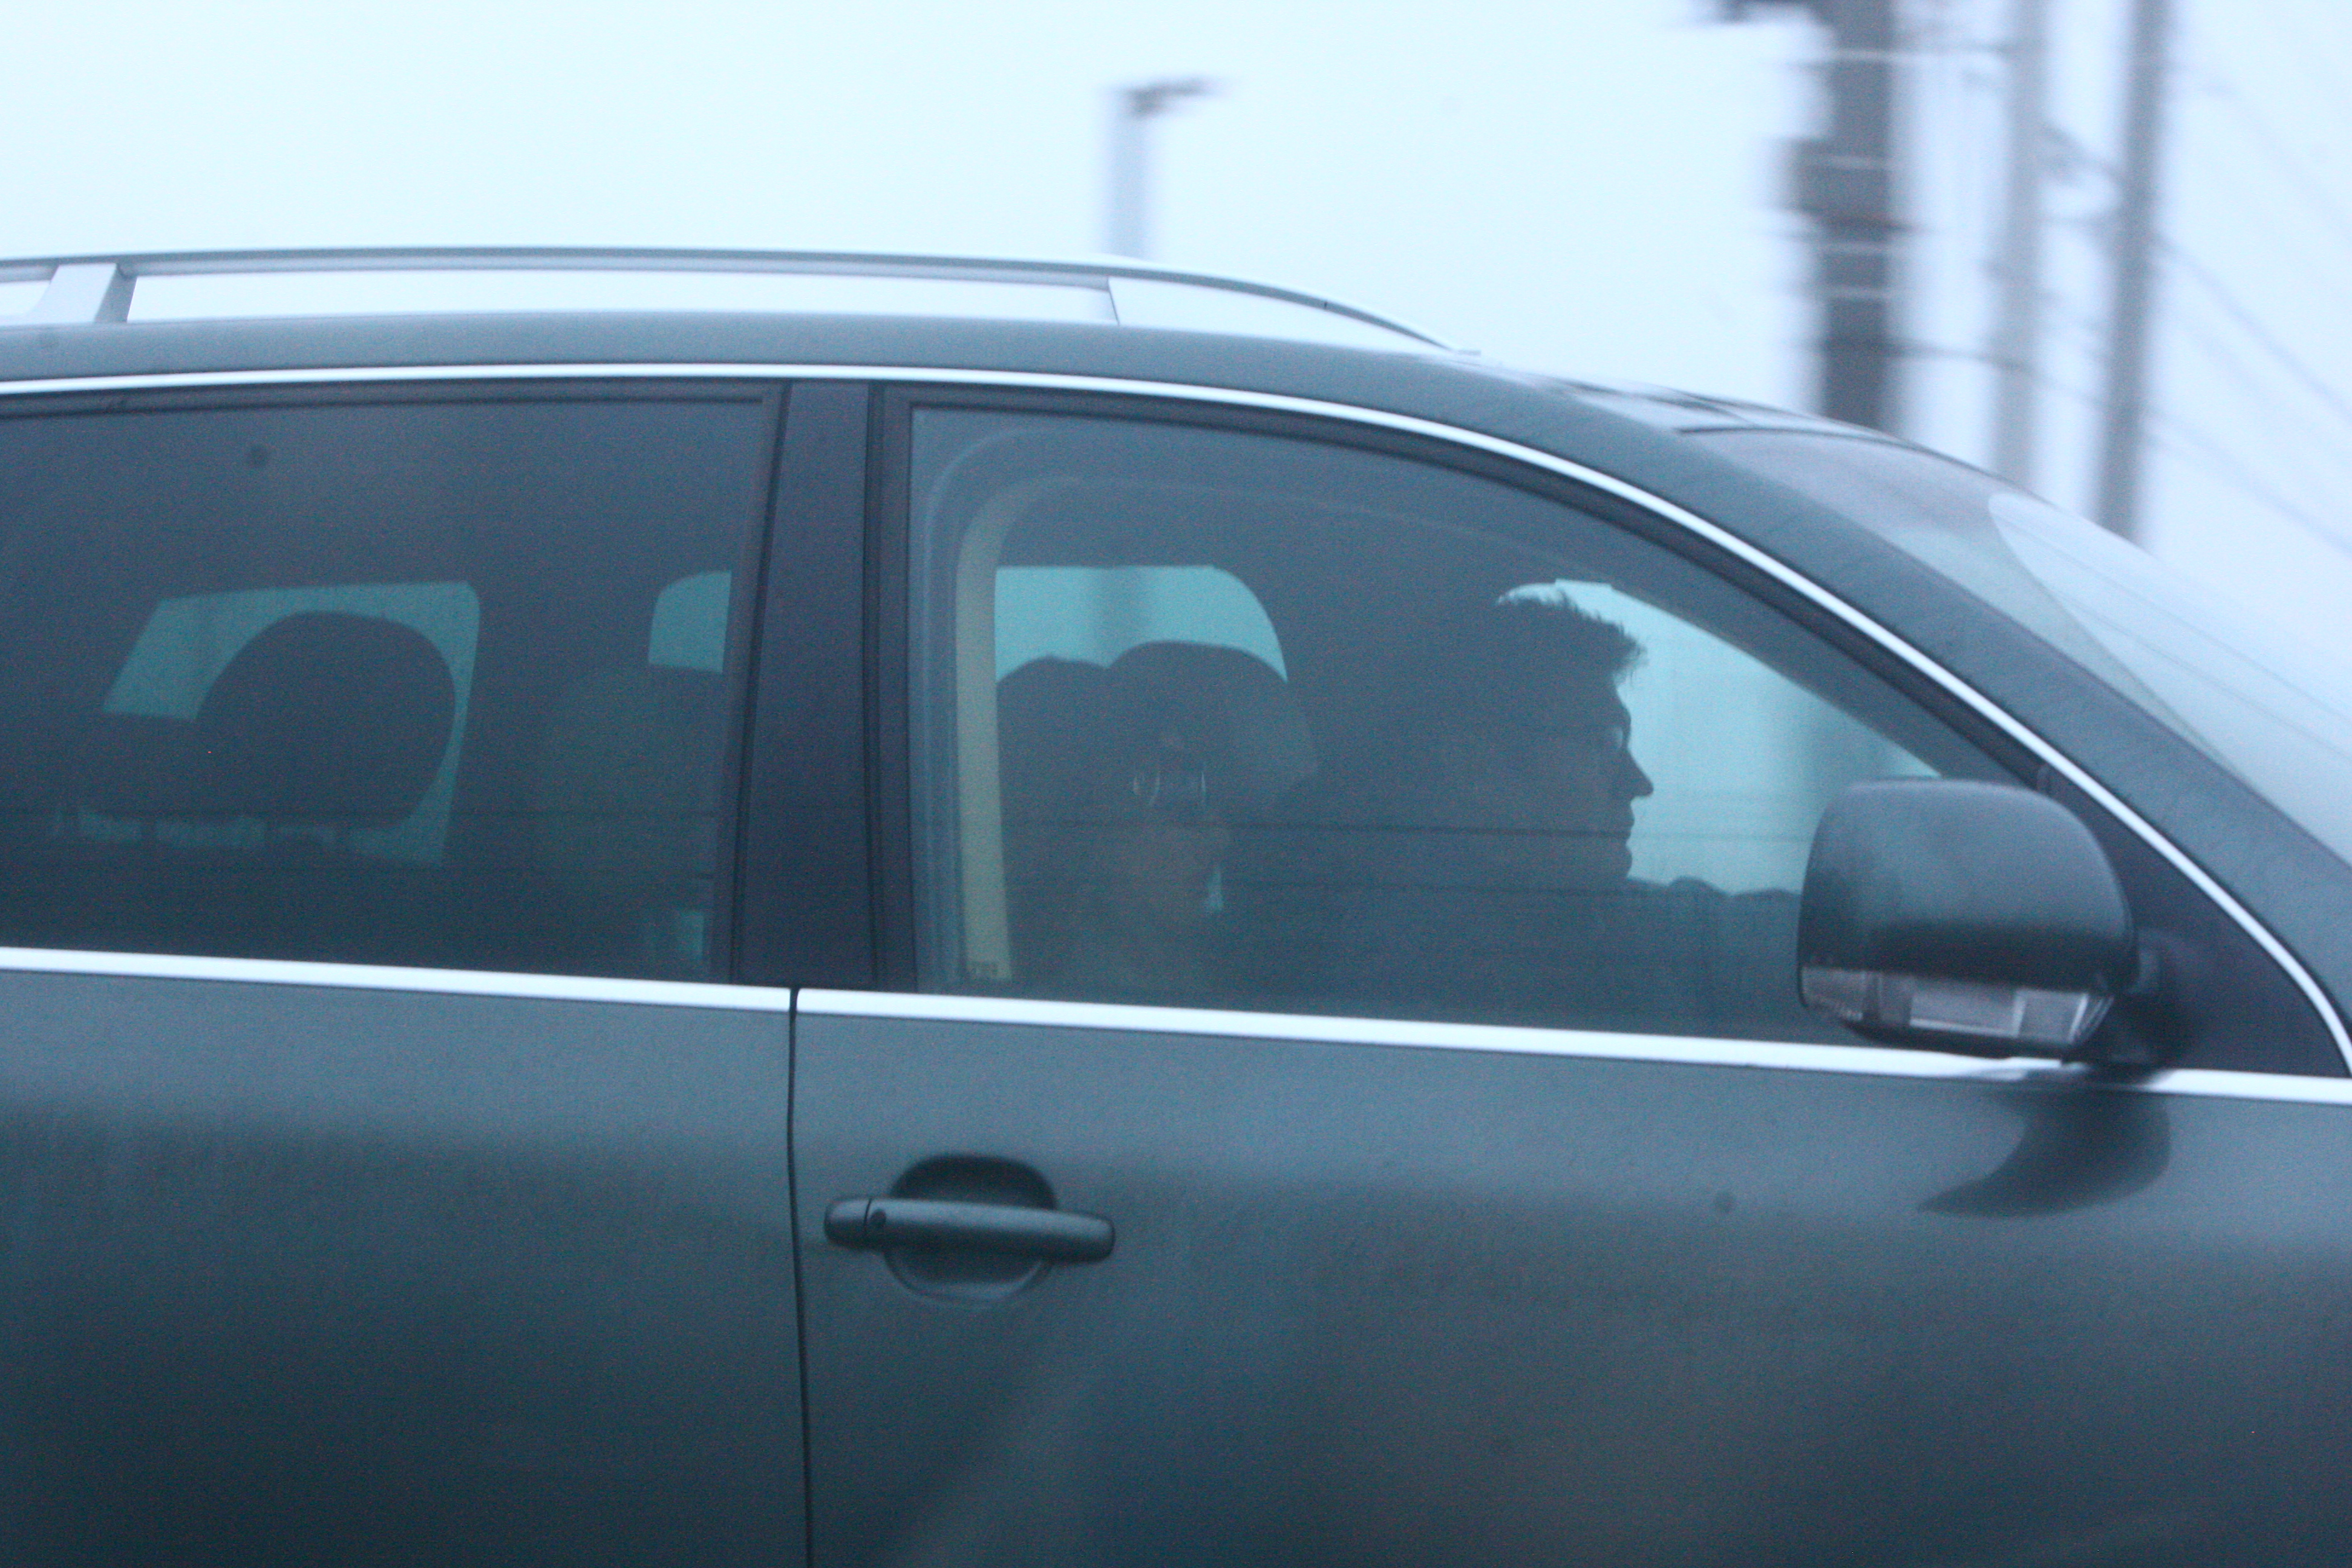 Cei doi poarta ochelari de soare, in masina desi in Bucuresti era ceata la ora realizarii fotografiilor